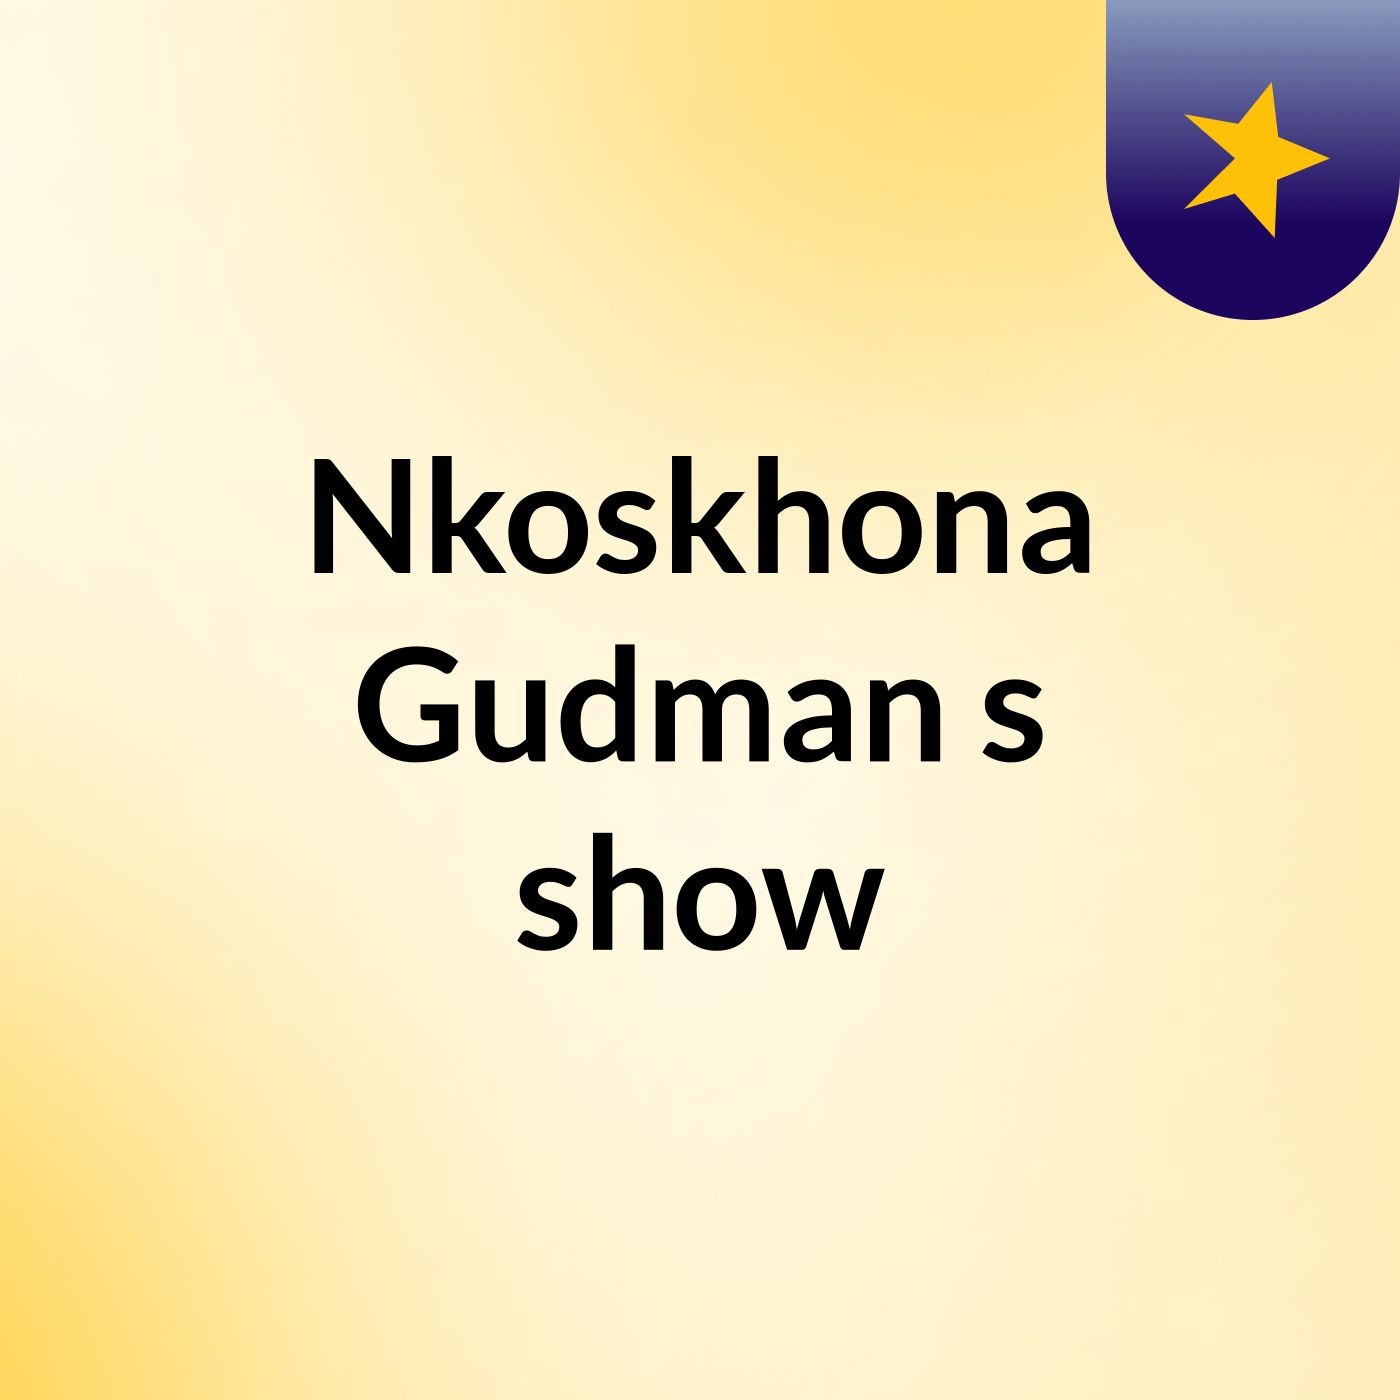 Nkoskhona Gudman's show